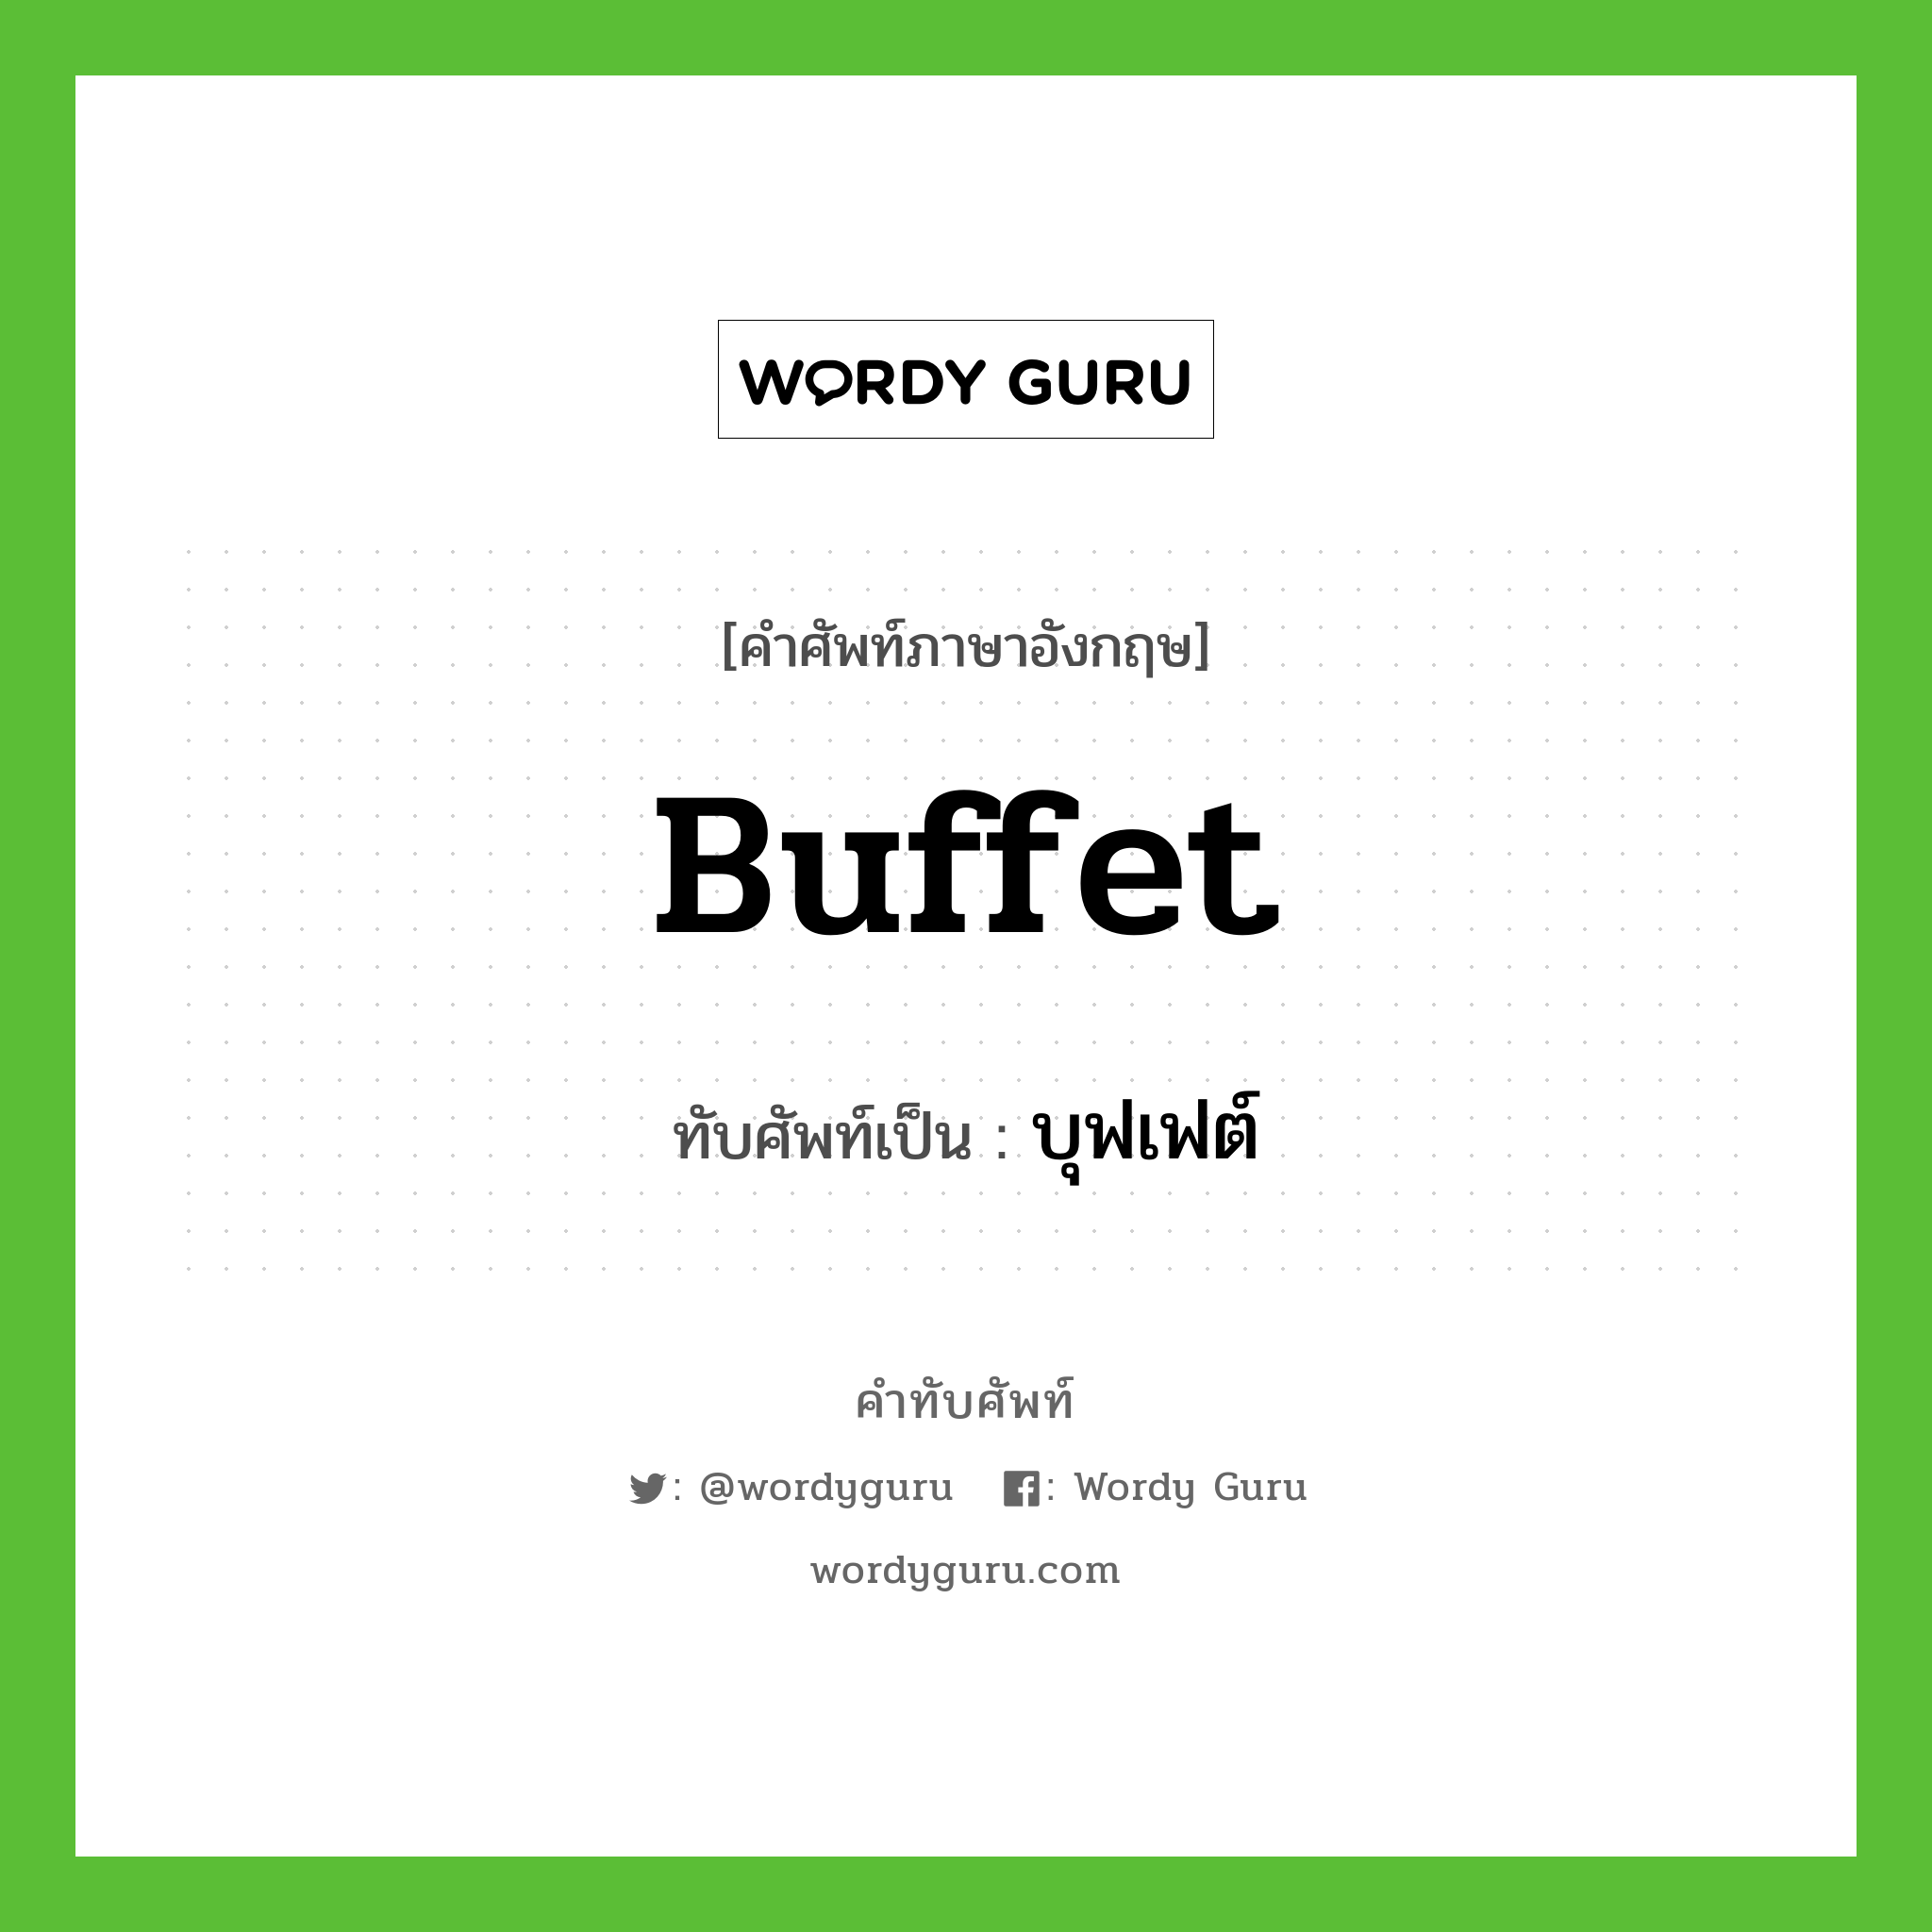 Buffet เขียนเป็นคำไทยว่าอะไร?, คำศัพท์ภาษาอังกฤษ Buffet ทับศัพท์เป็น บุฟเฟต์